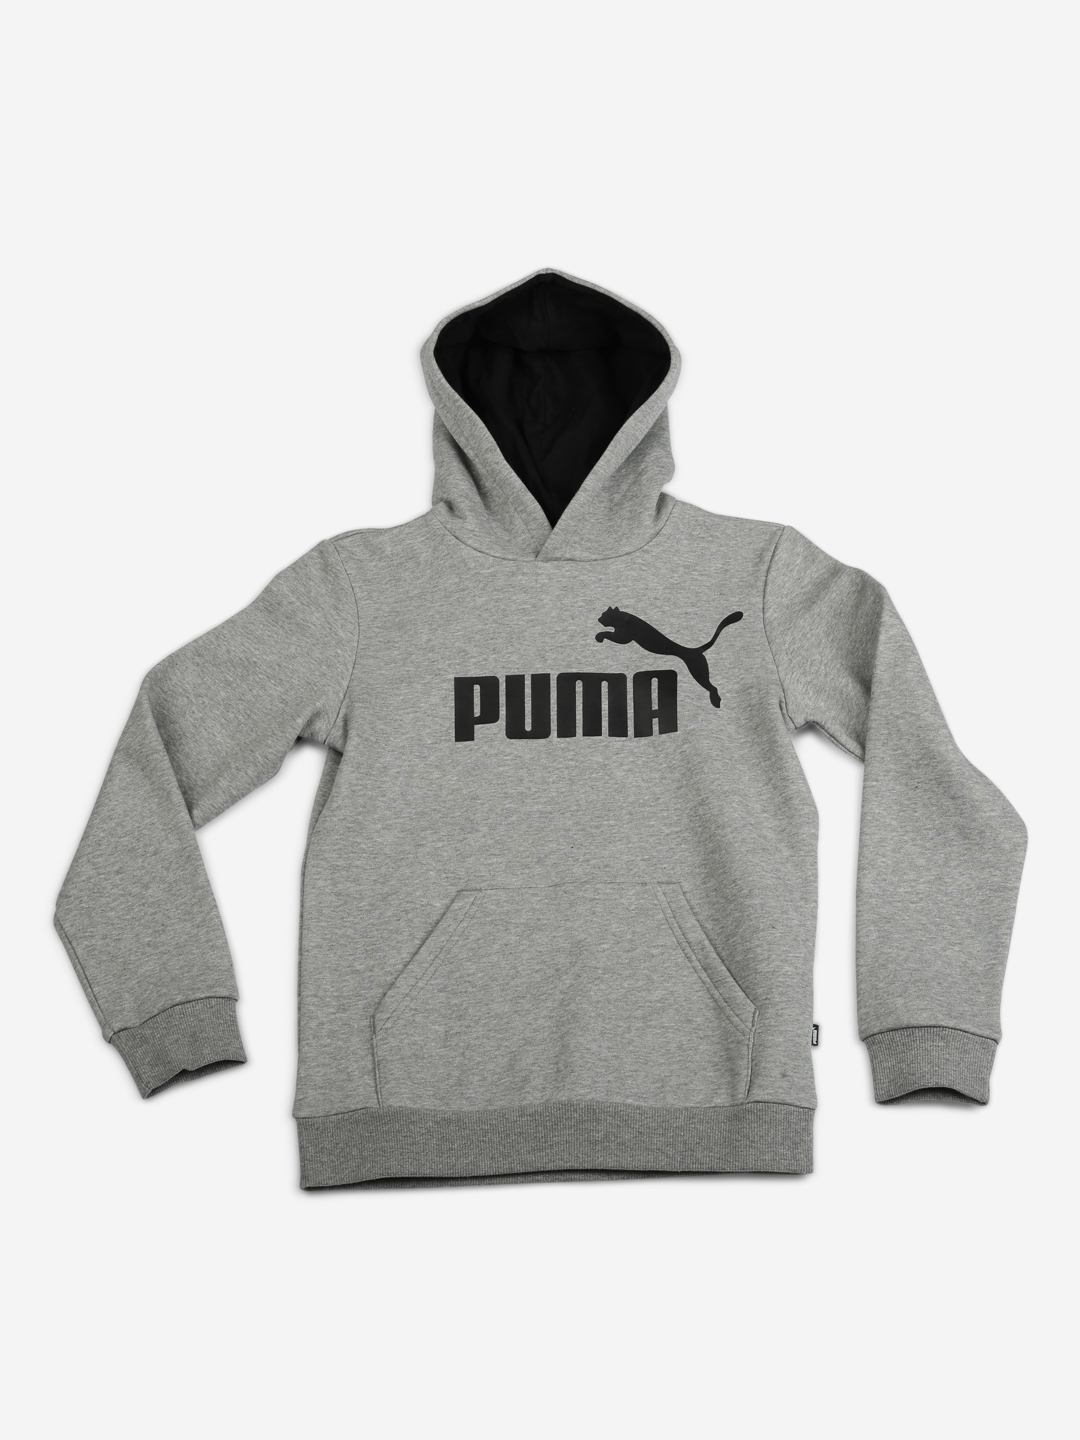 Buy Puma Boys Grey & Black Printed ESS Logo Hoody Sweatshirt ...